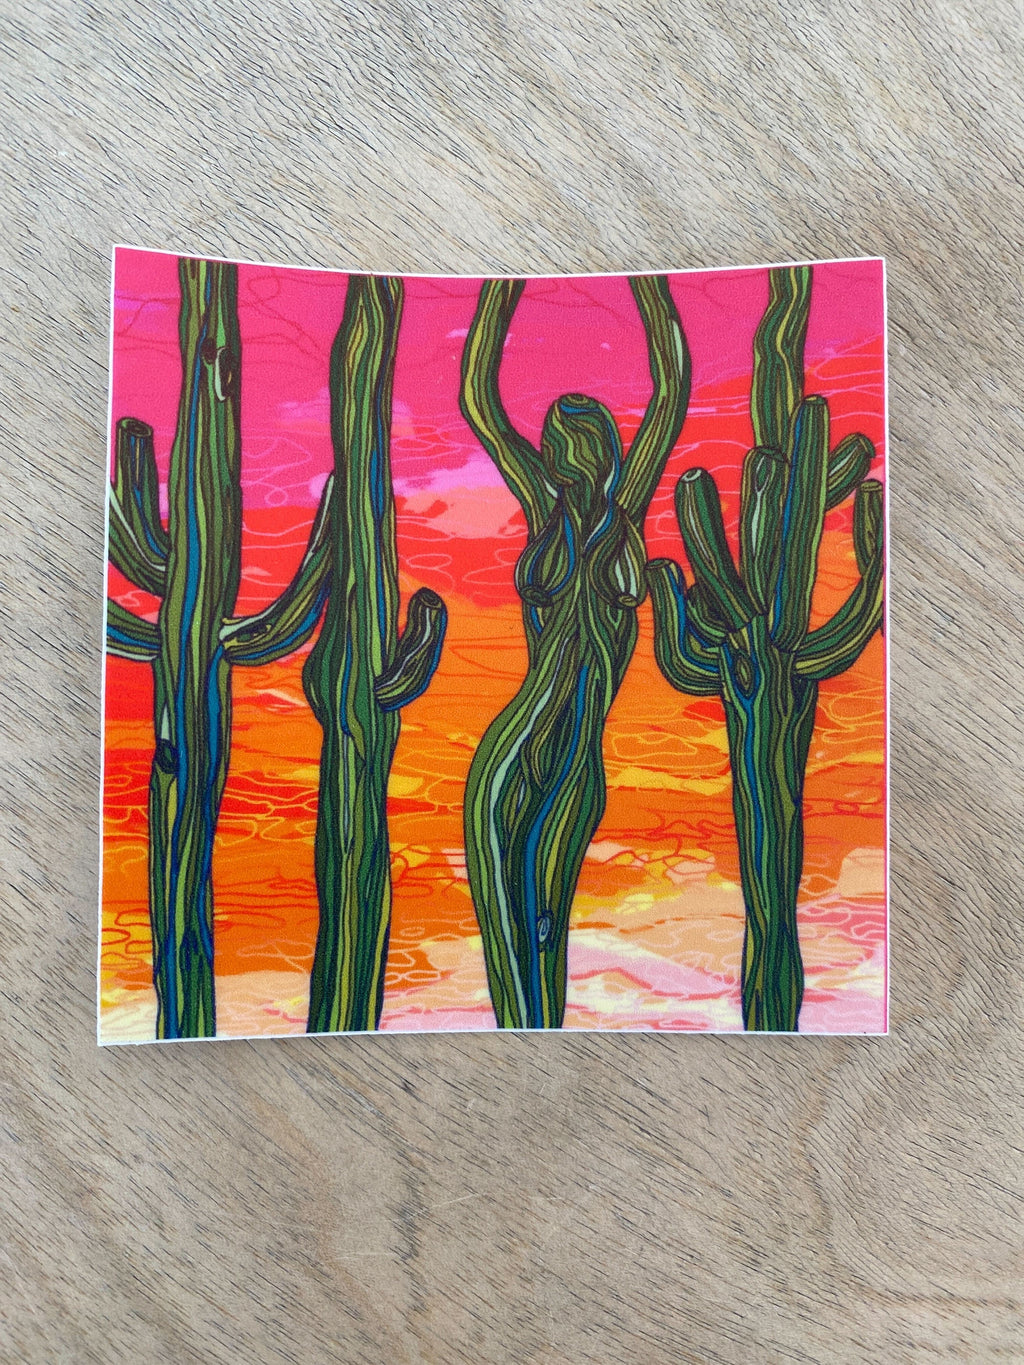 Saguaro Silhouette Sticker